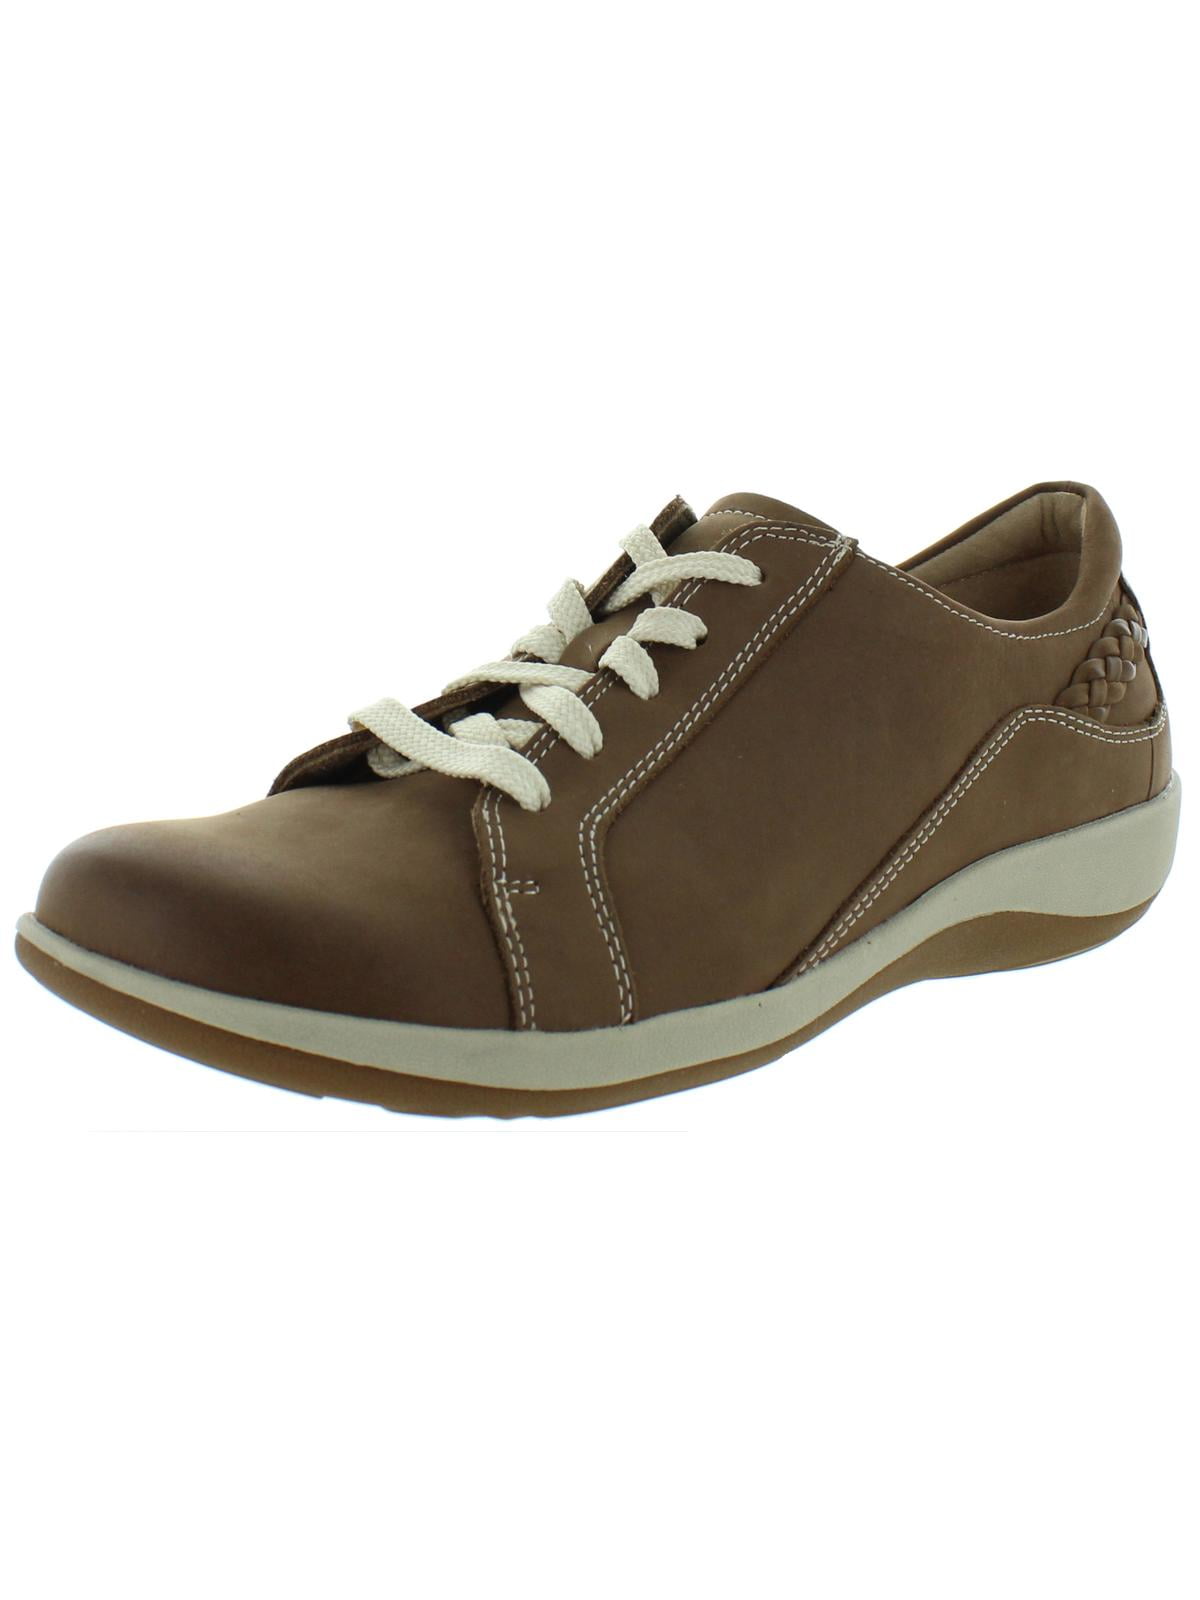 Aetrex - Aetrex Womens Dana Leather Comfort Sneakers - Walmart.com ...